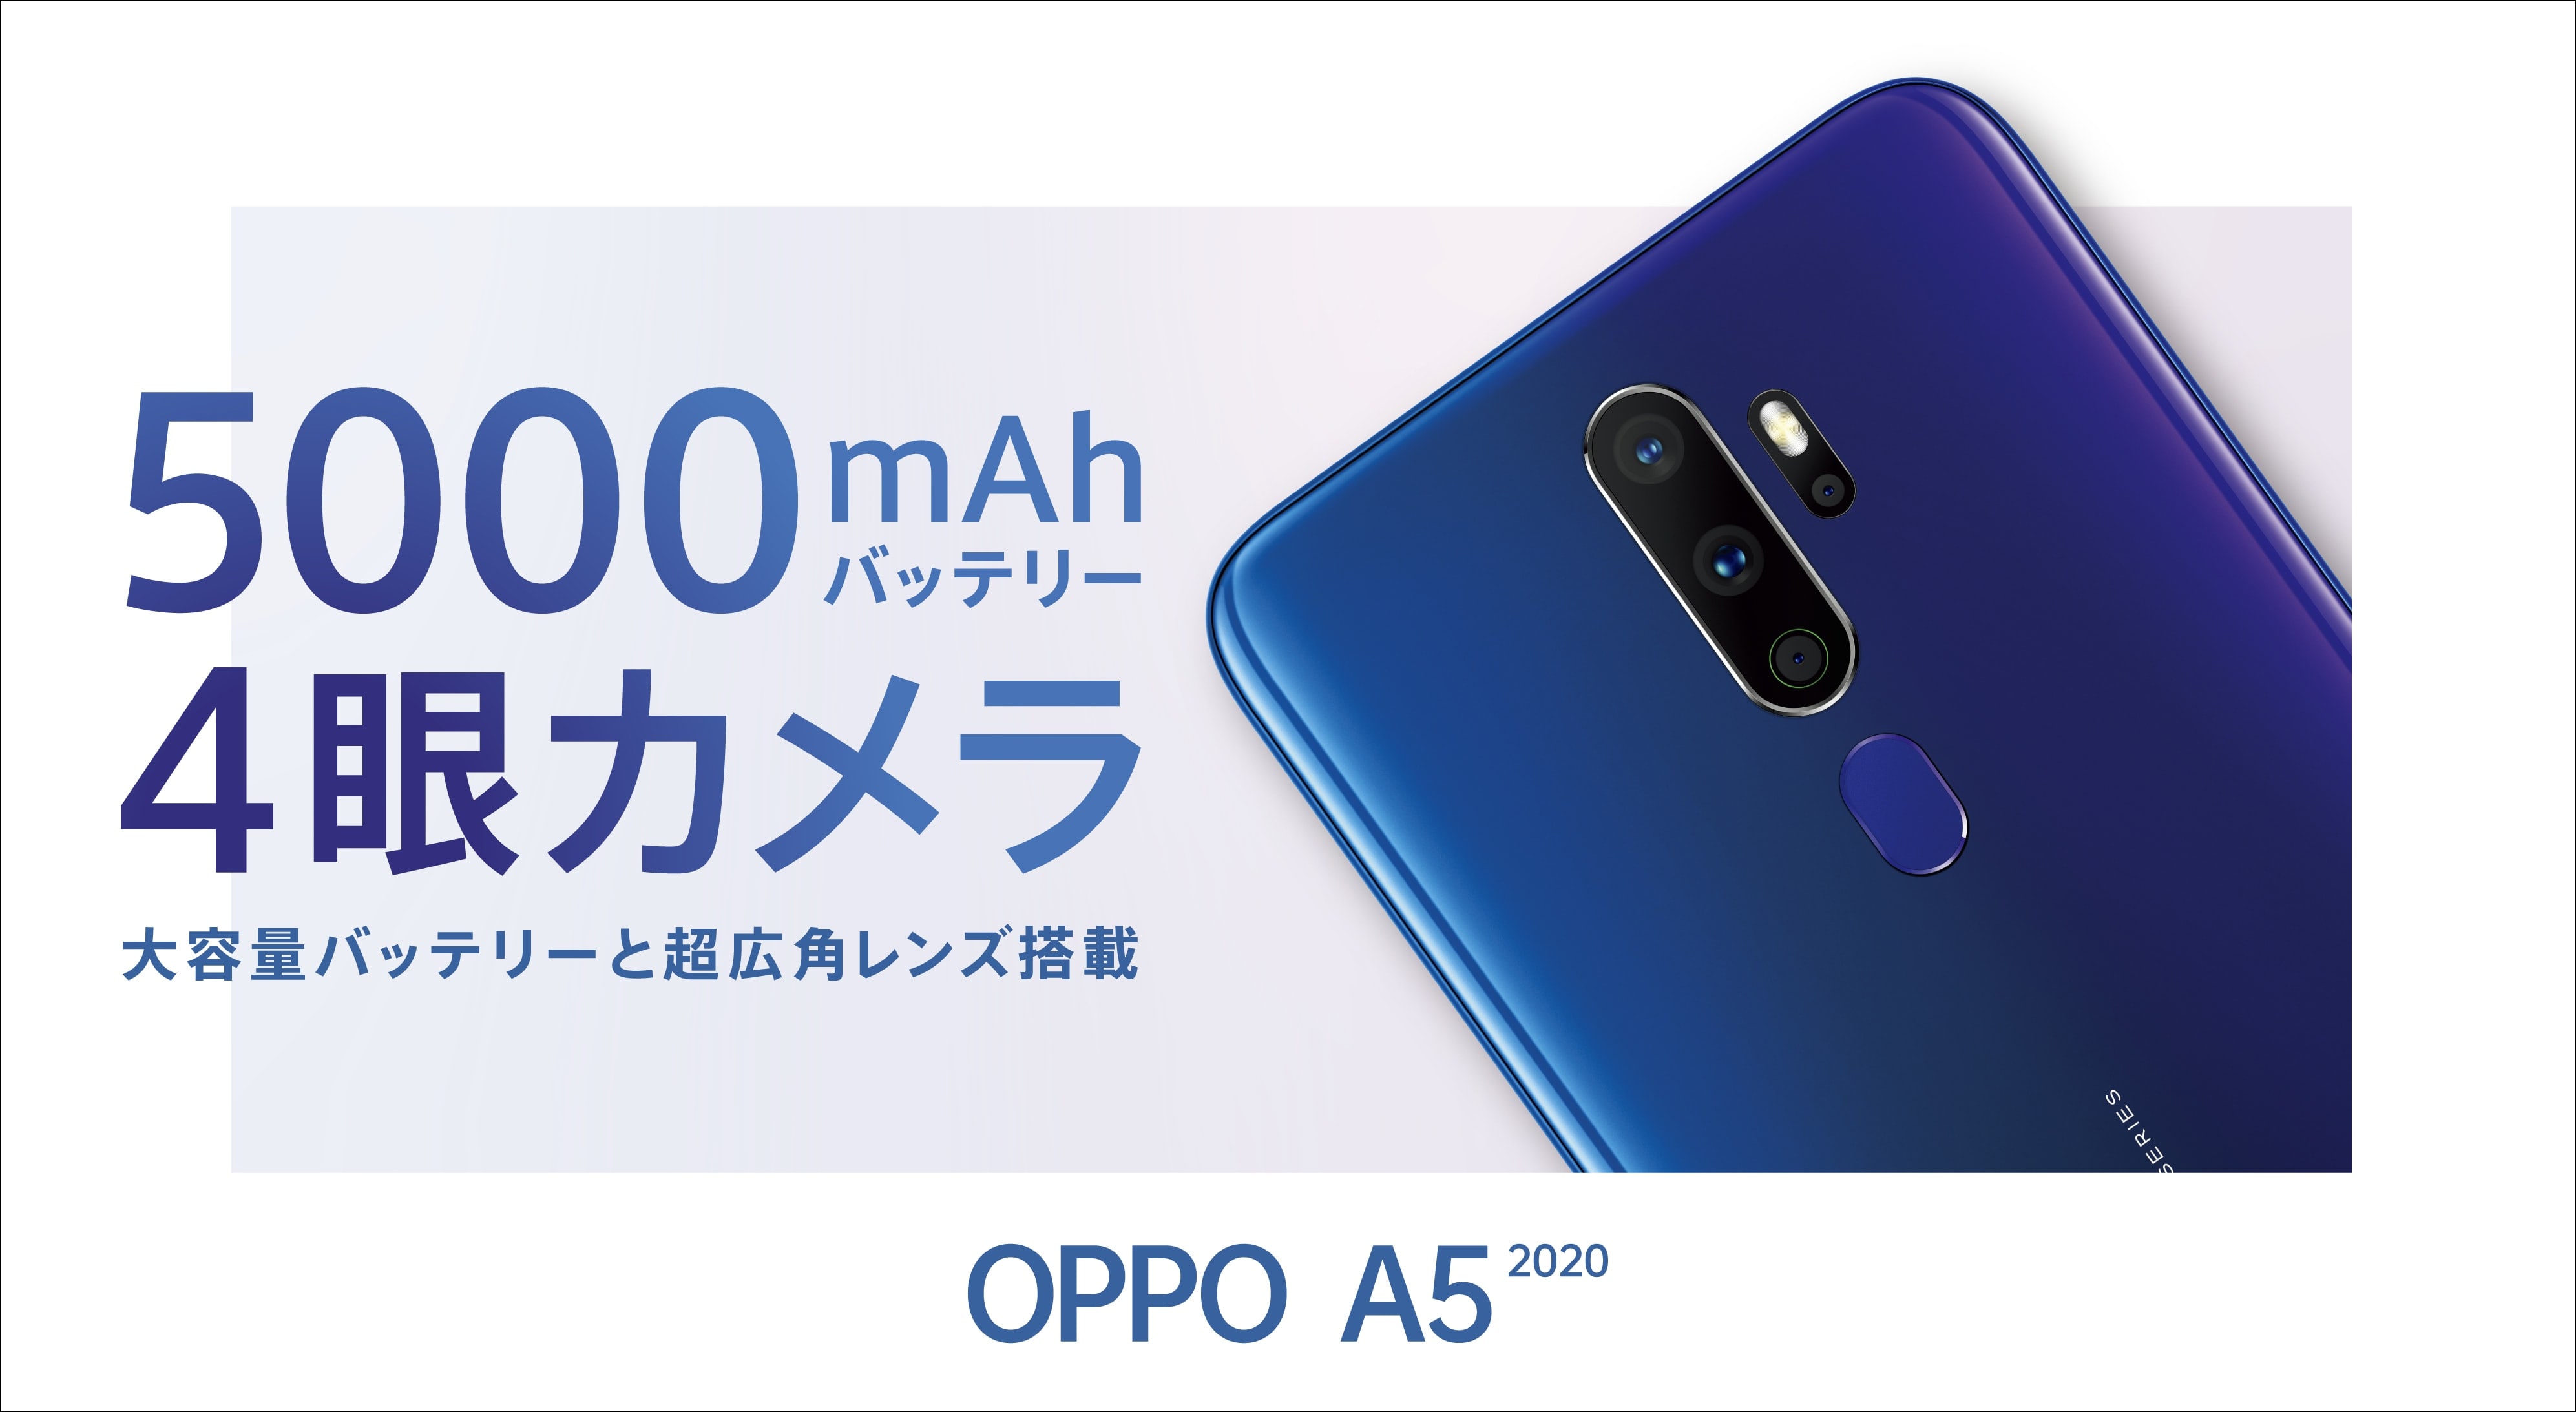 SIMフリースマートフォン「OPPO A5 2020」を発表